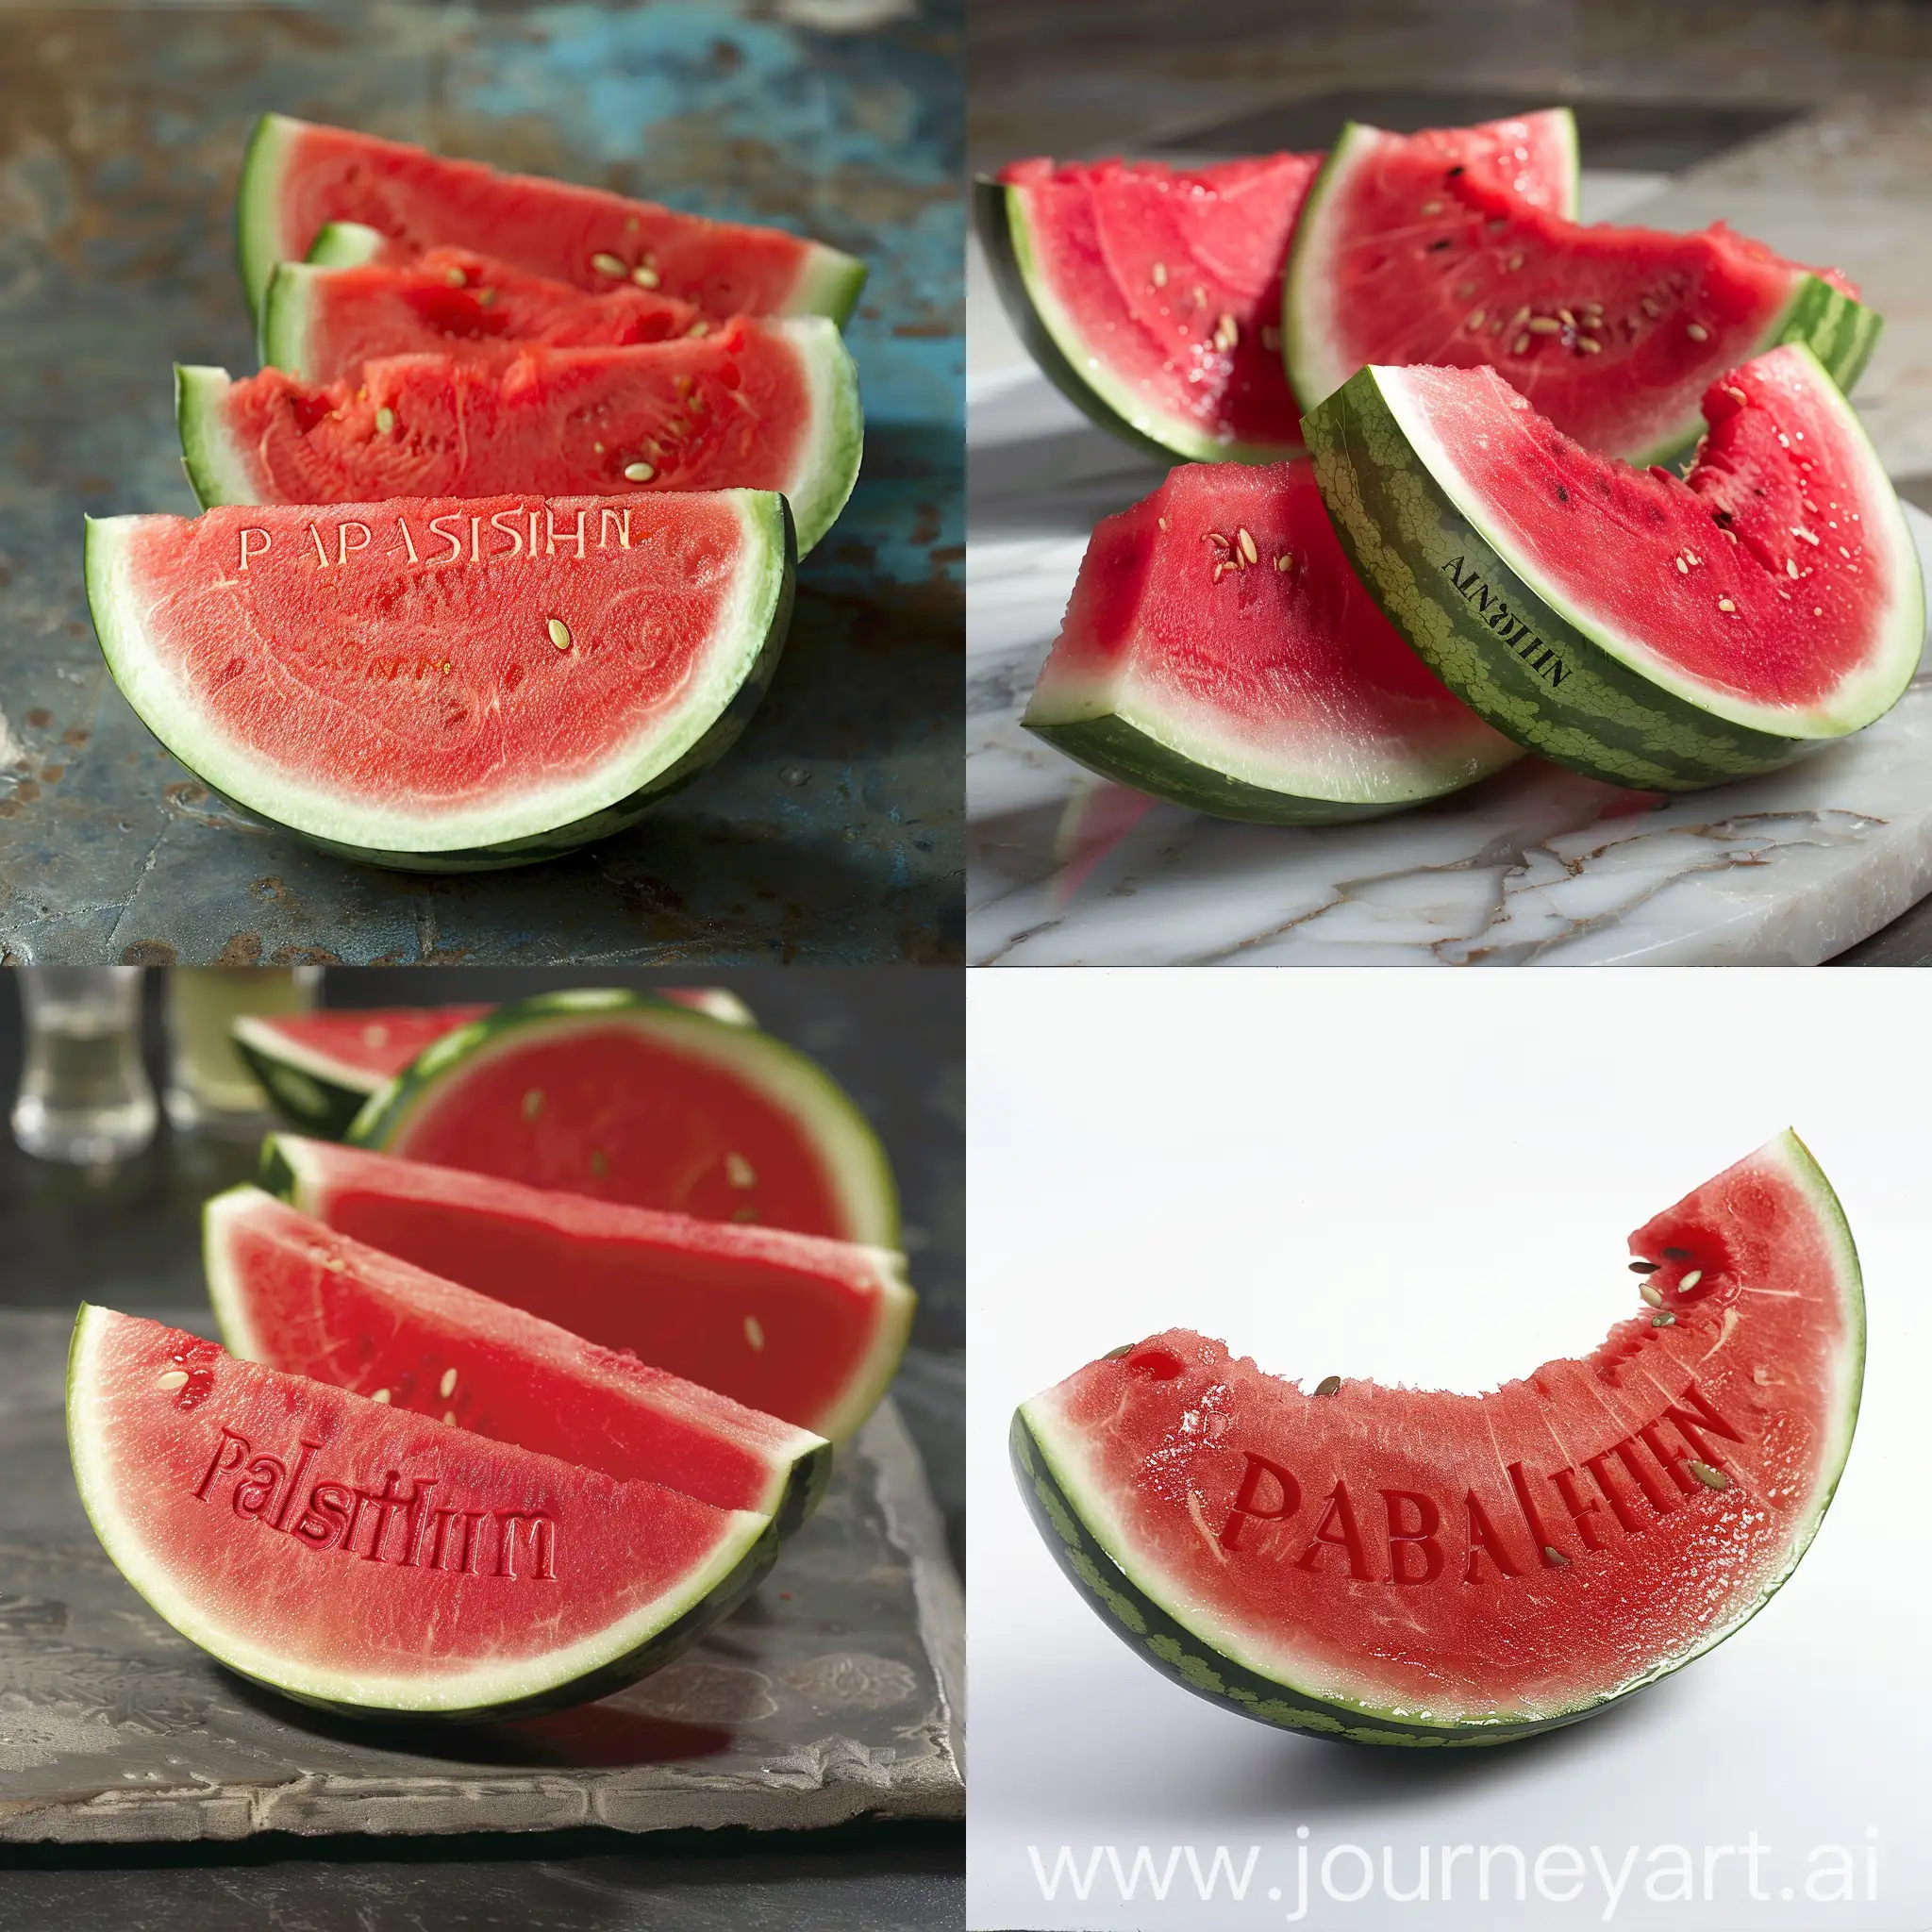 Vibrant-Red-Watermelon-with-PALESTINE-Inscription